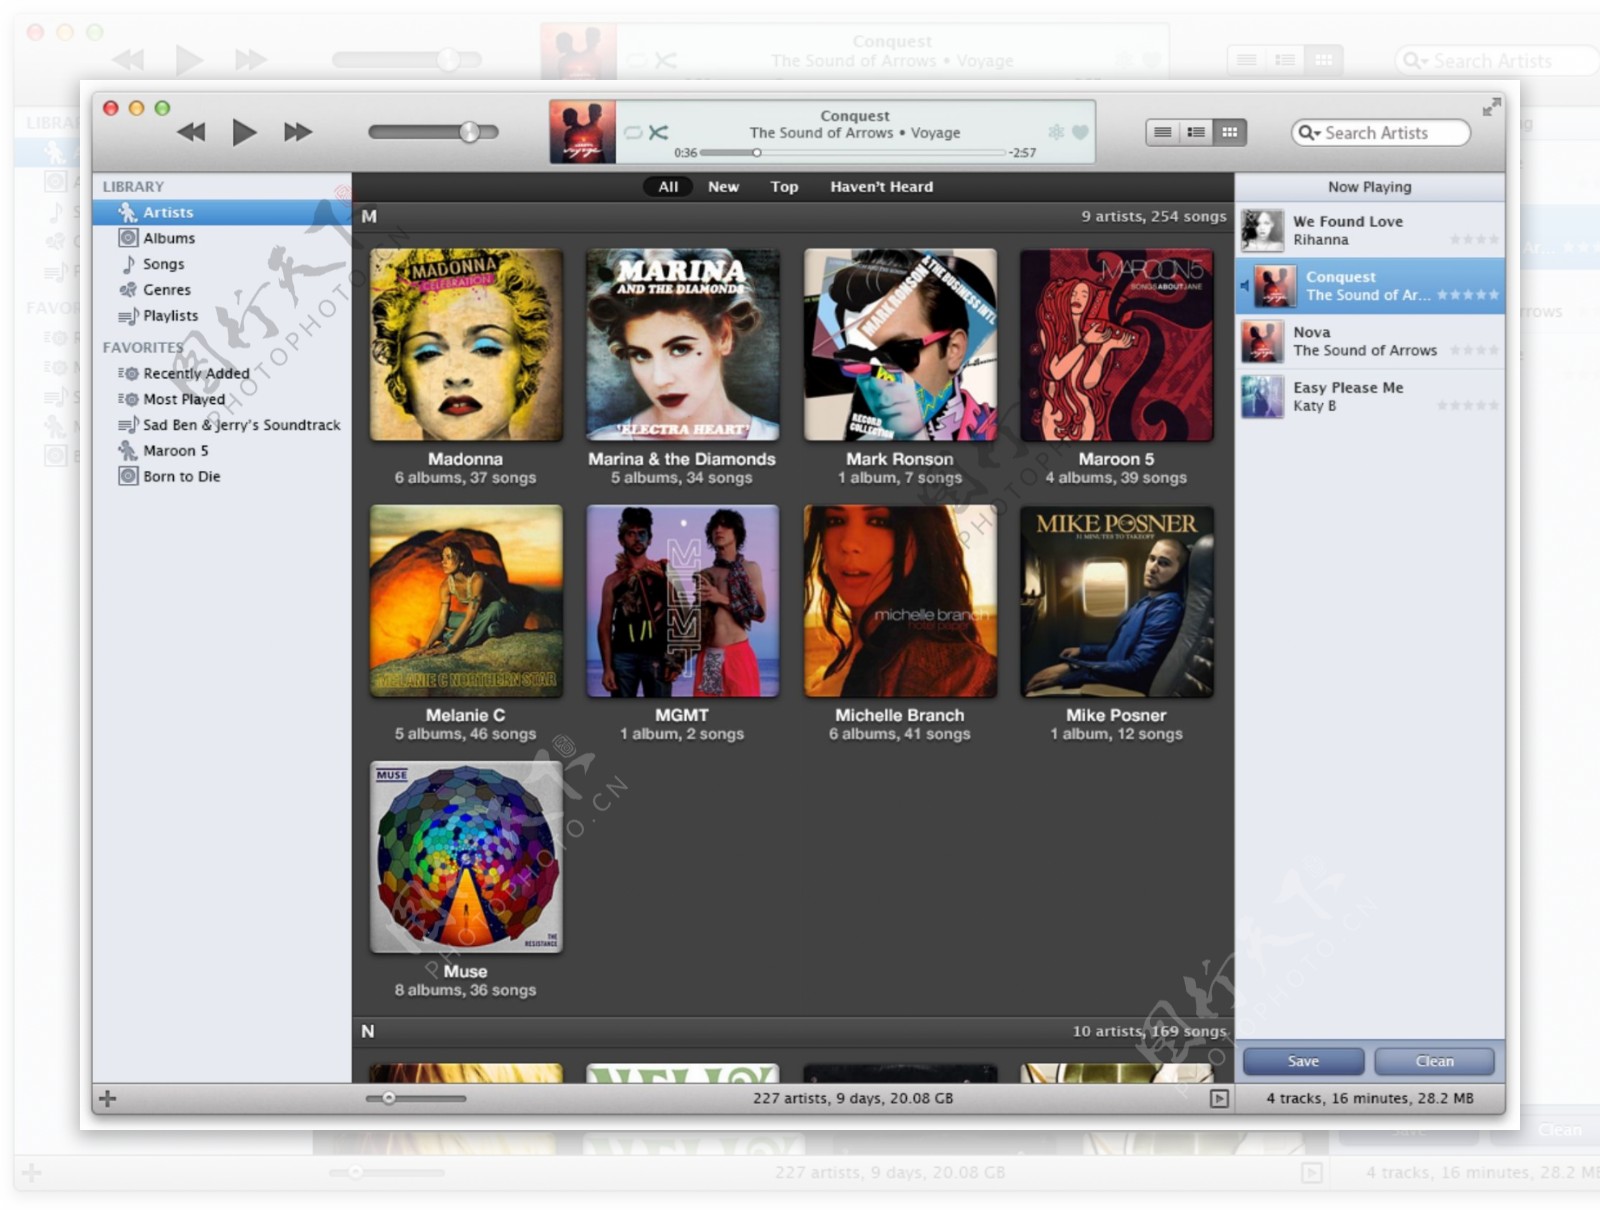 iTunesUI界面设计PSD素材